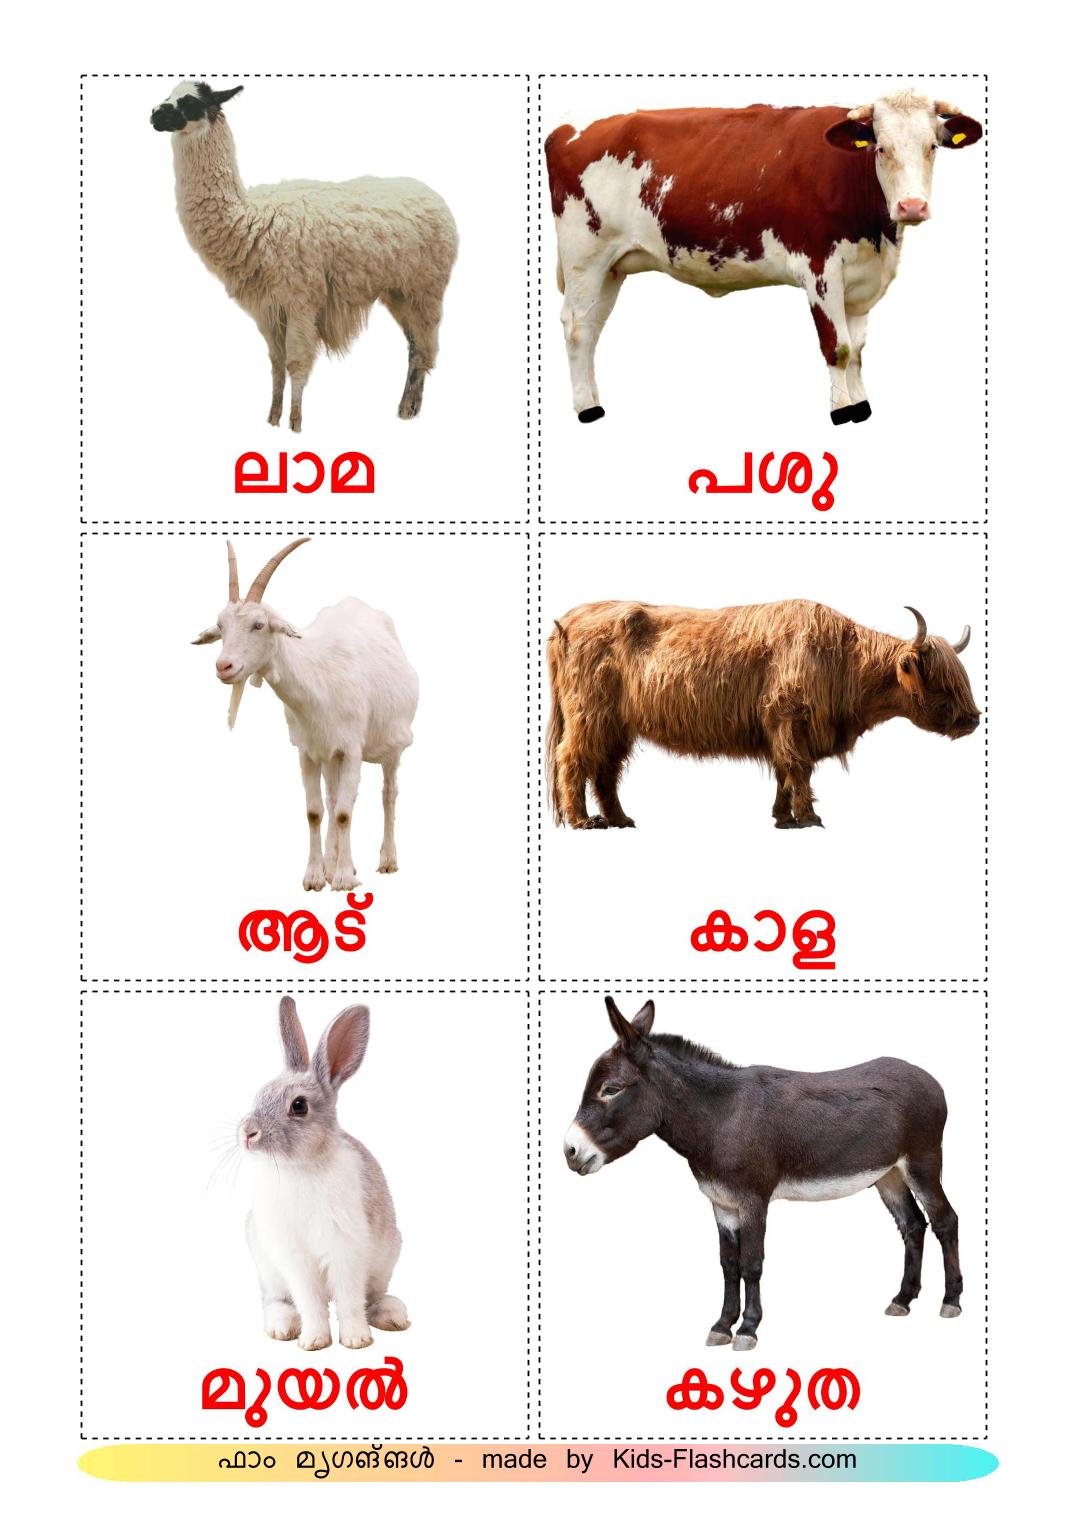 Animales en la Granja - 15 fichas de malayalam para imprimir gratis 